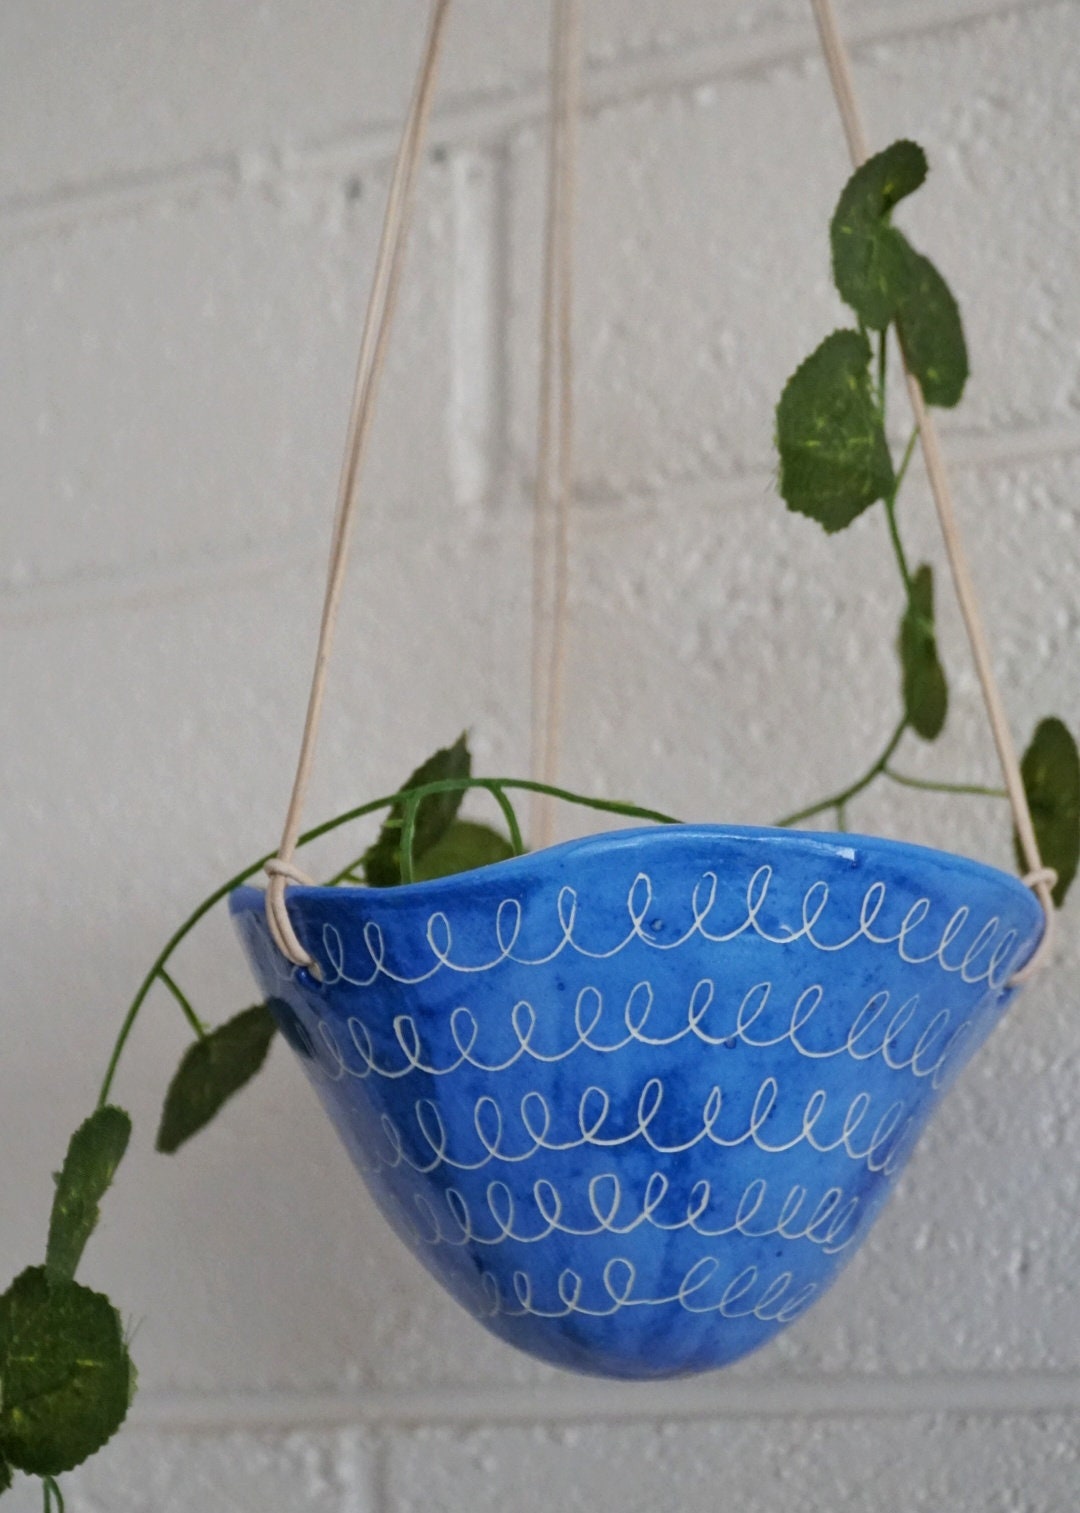 Blue & White Hanging Planter w/ Carved "Curlique" Design - Glazed Pot - Succulent, Cactus, Herb, Air Plant, Etc - Housewarming